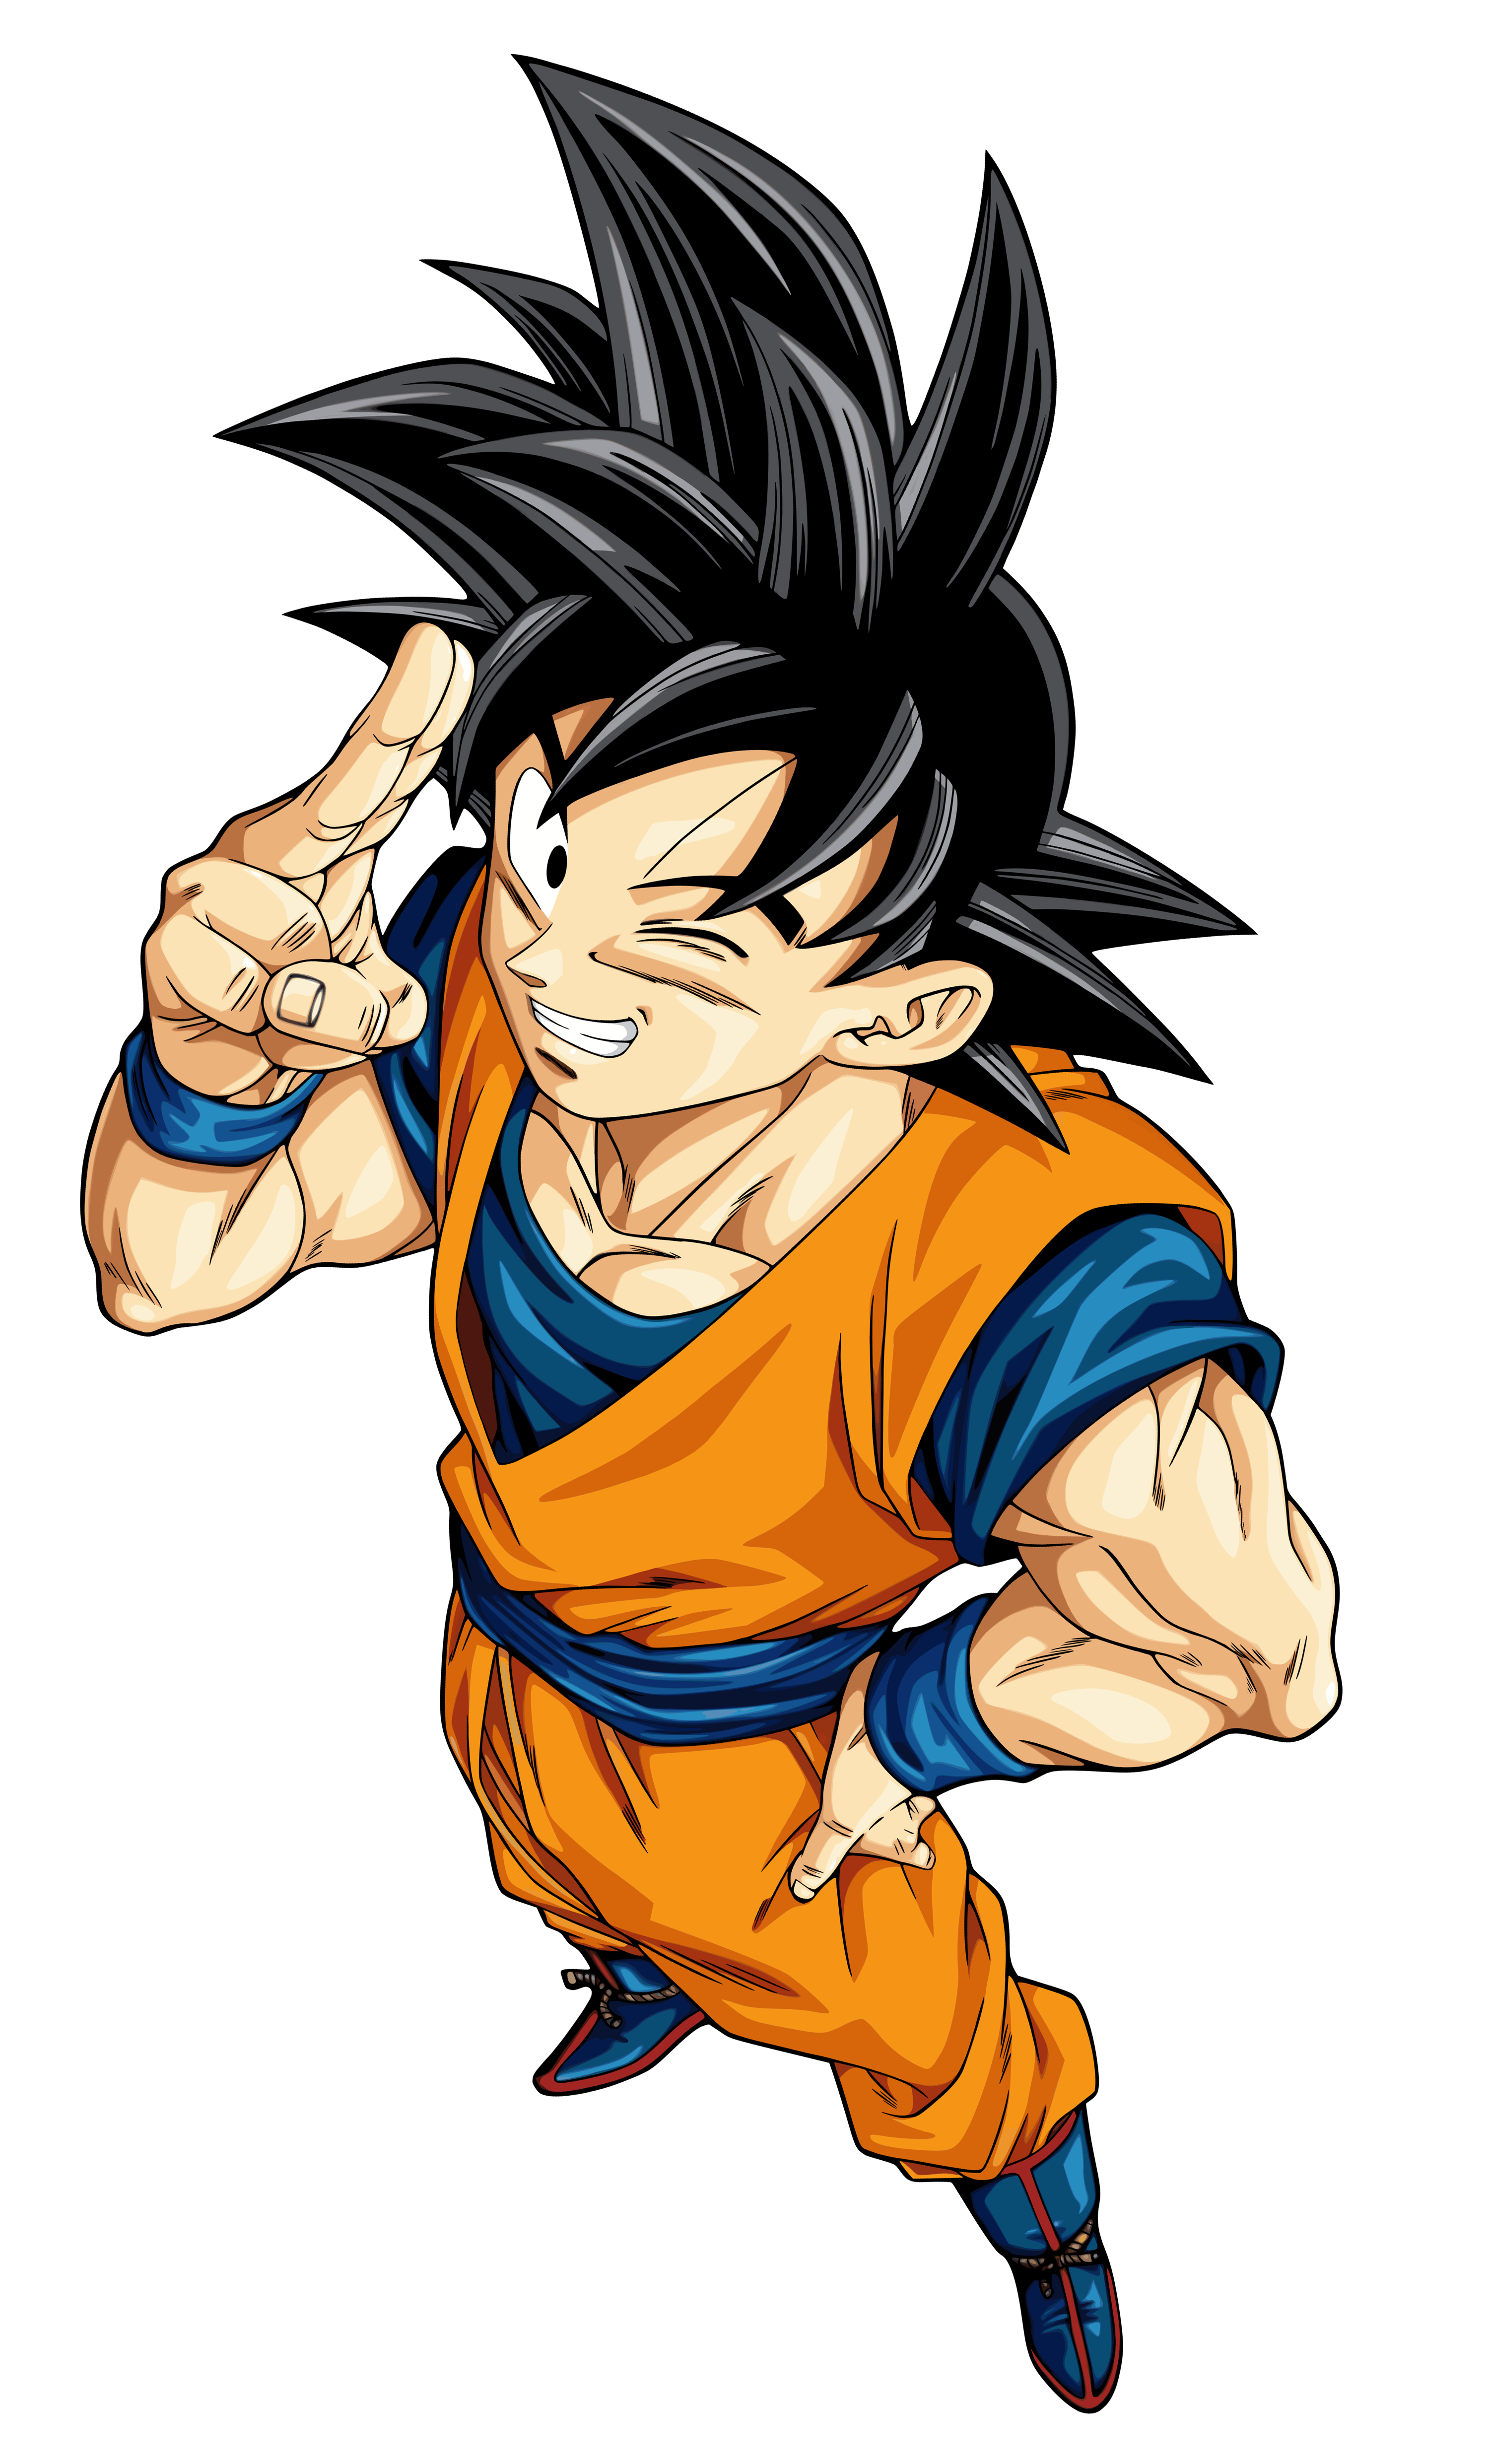 Son Goku (Dragon Ball Super), VS Battles Wiki, Fandom